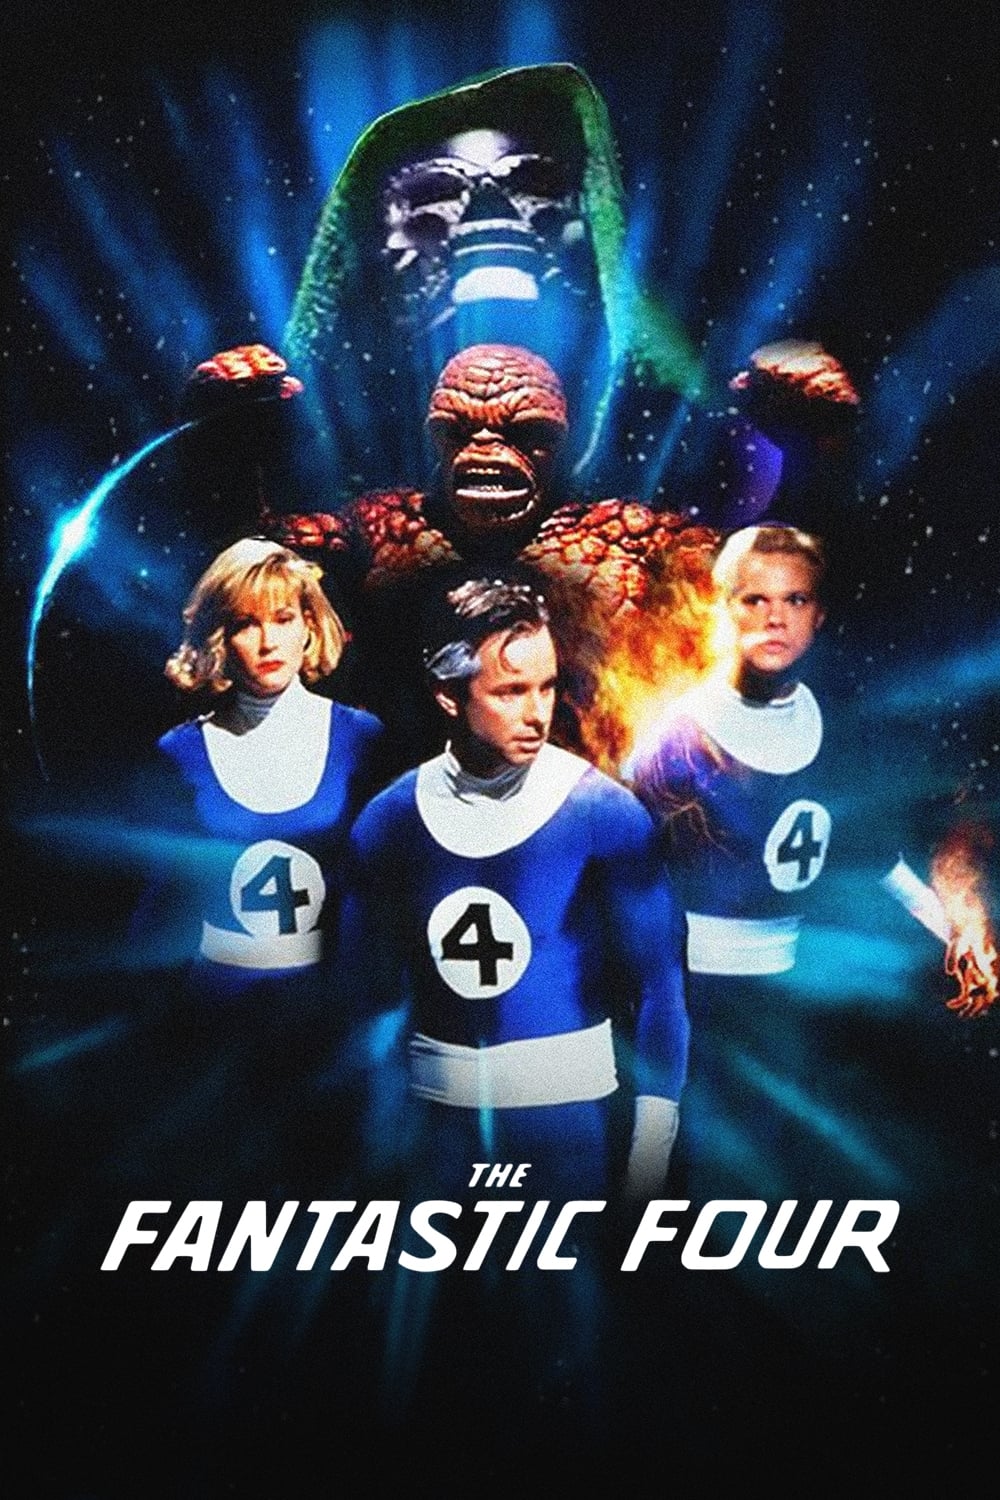 The Fantastic Four film